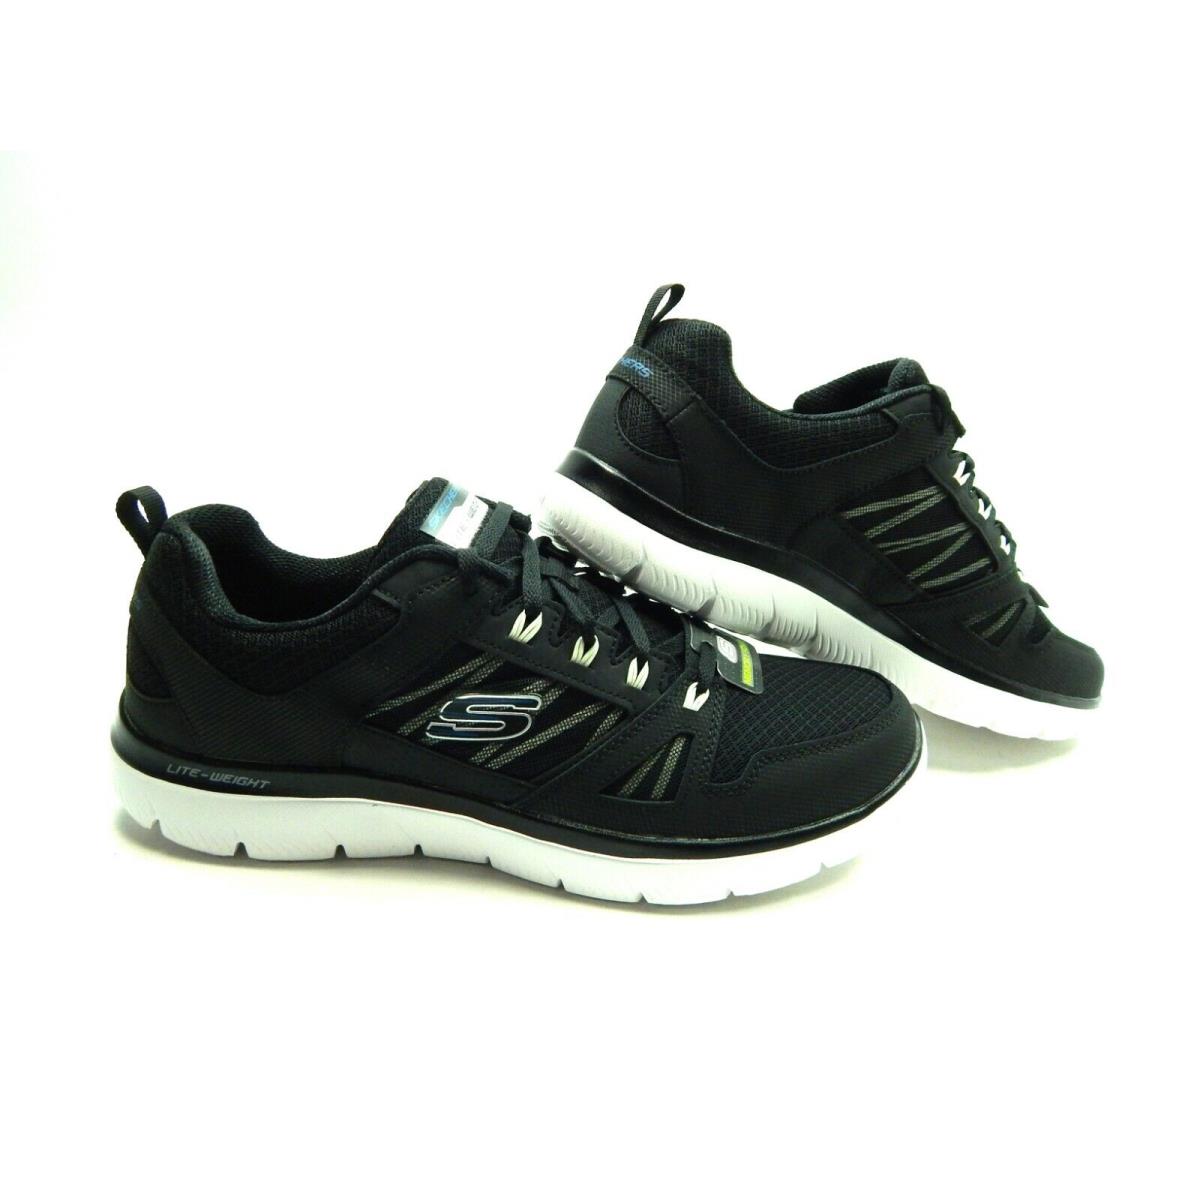 Skechers shoes SUMMITS - Black 9